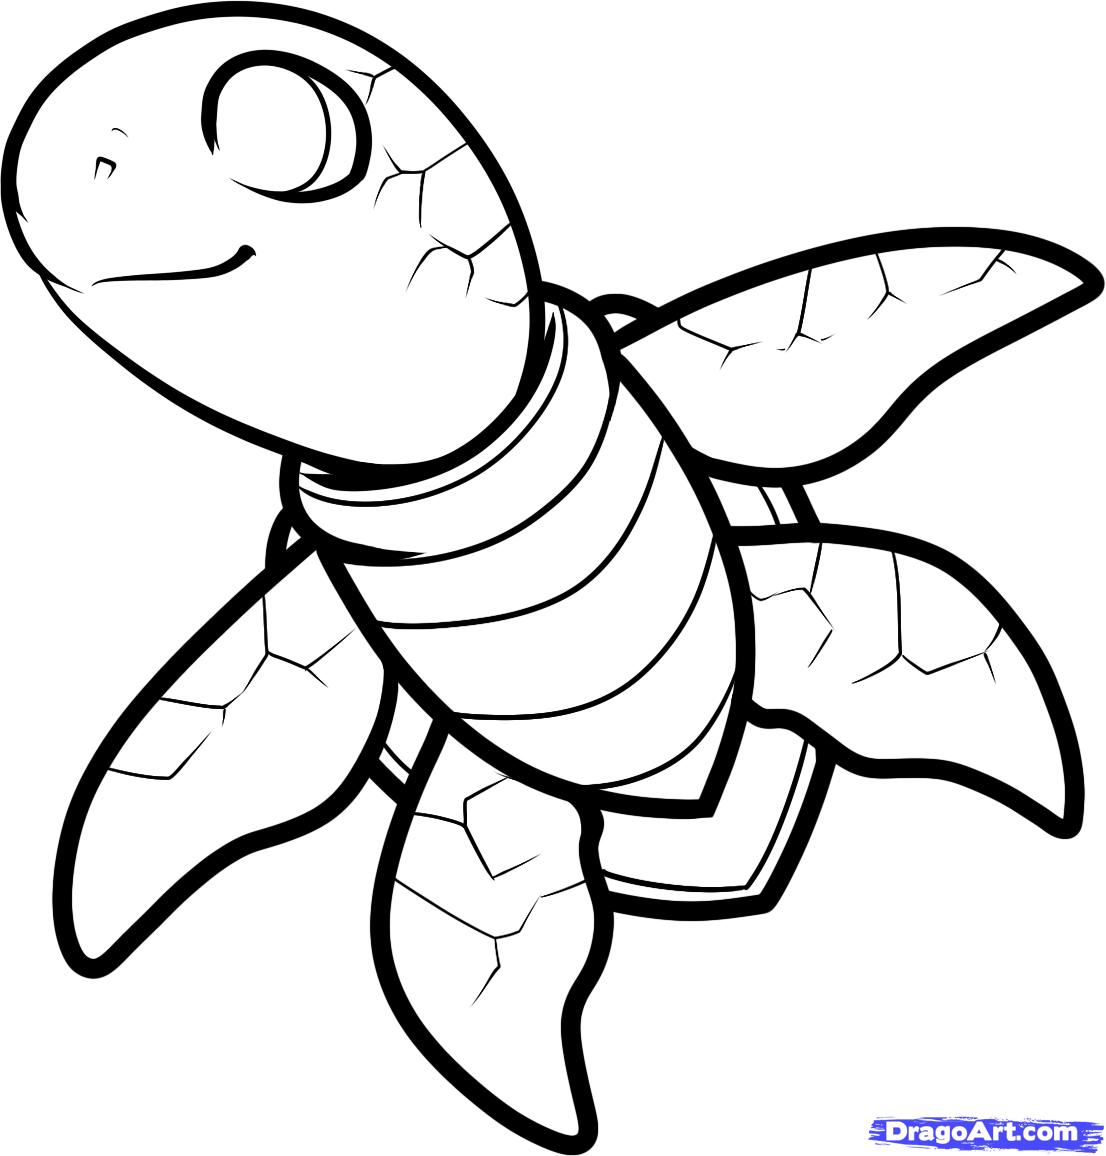 How to Draw a Sea Turtle, Cartoon Sea Turtle, Step by Step 